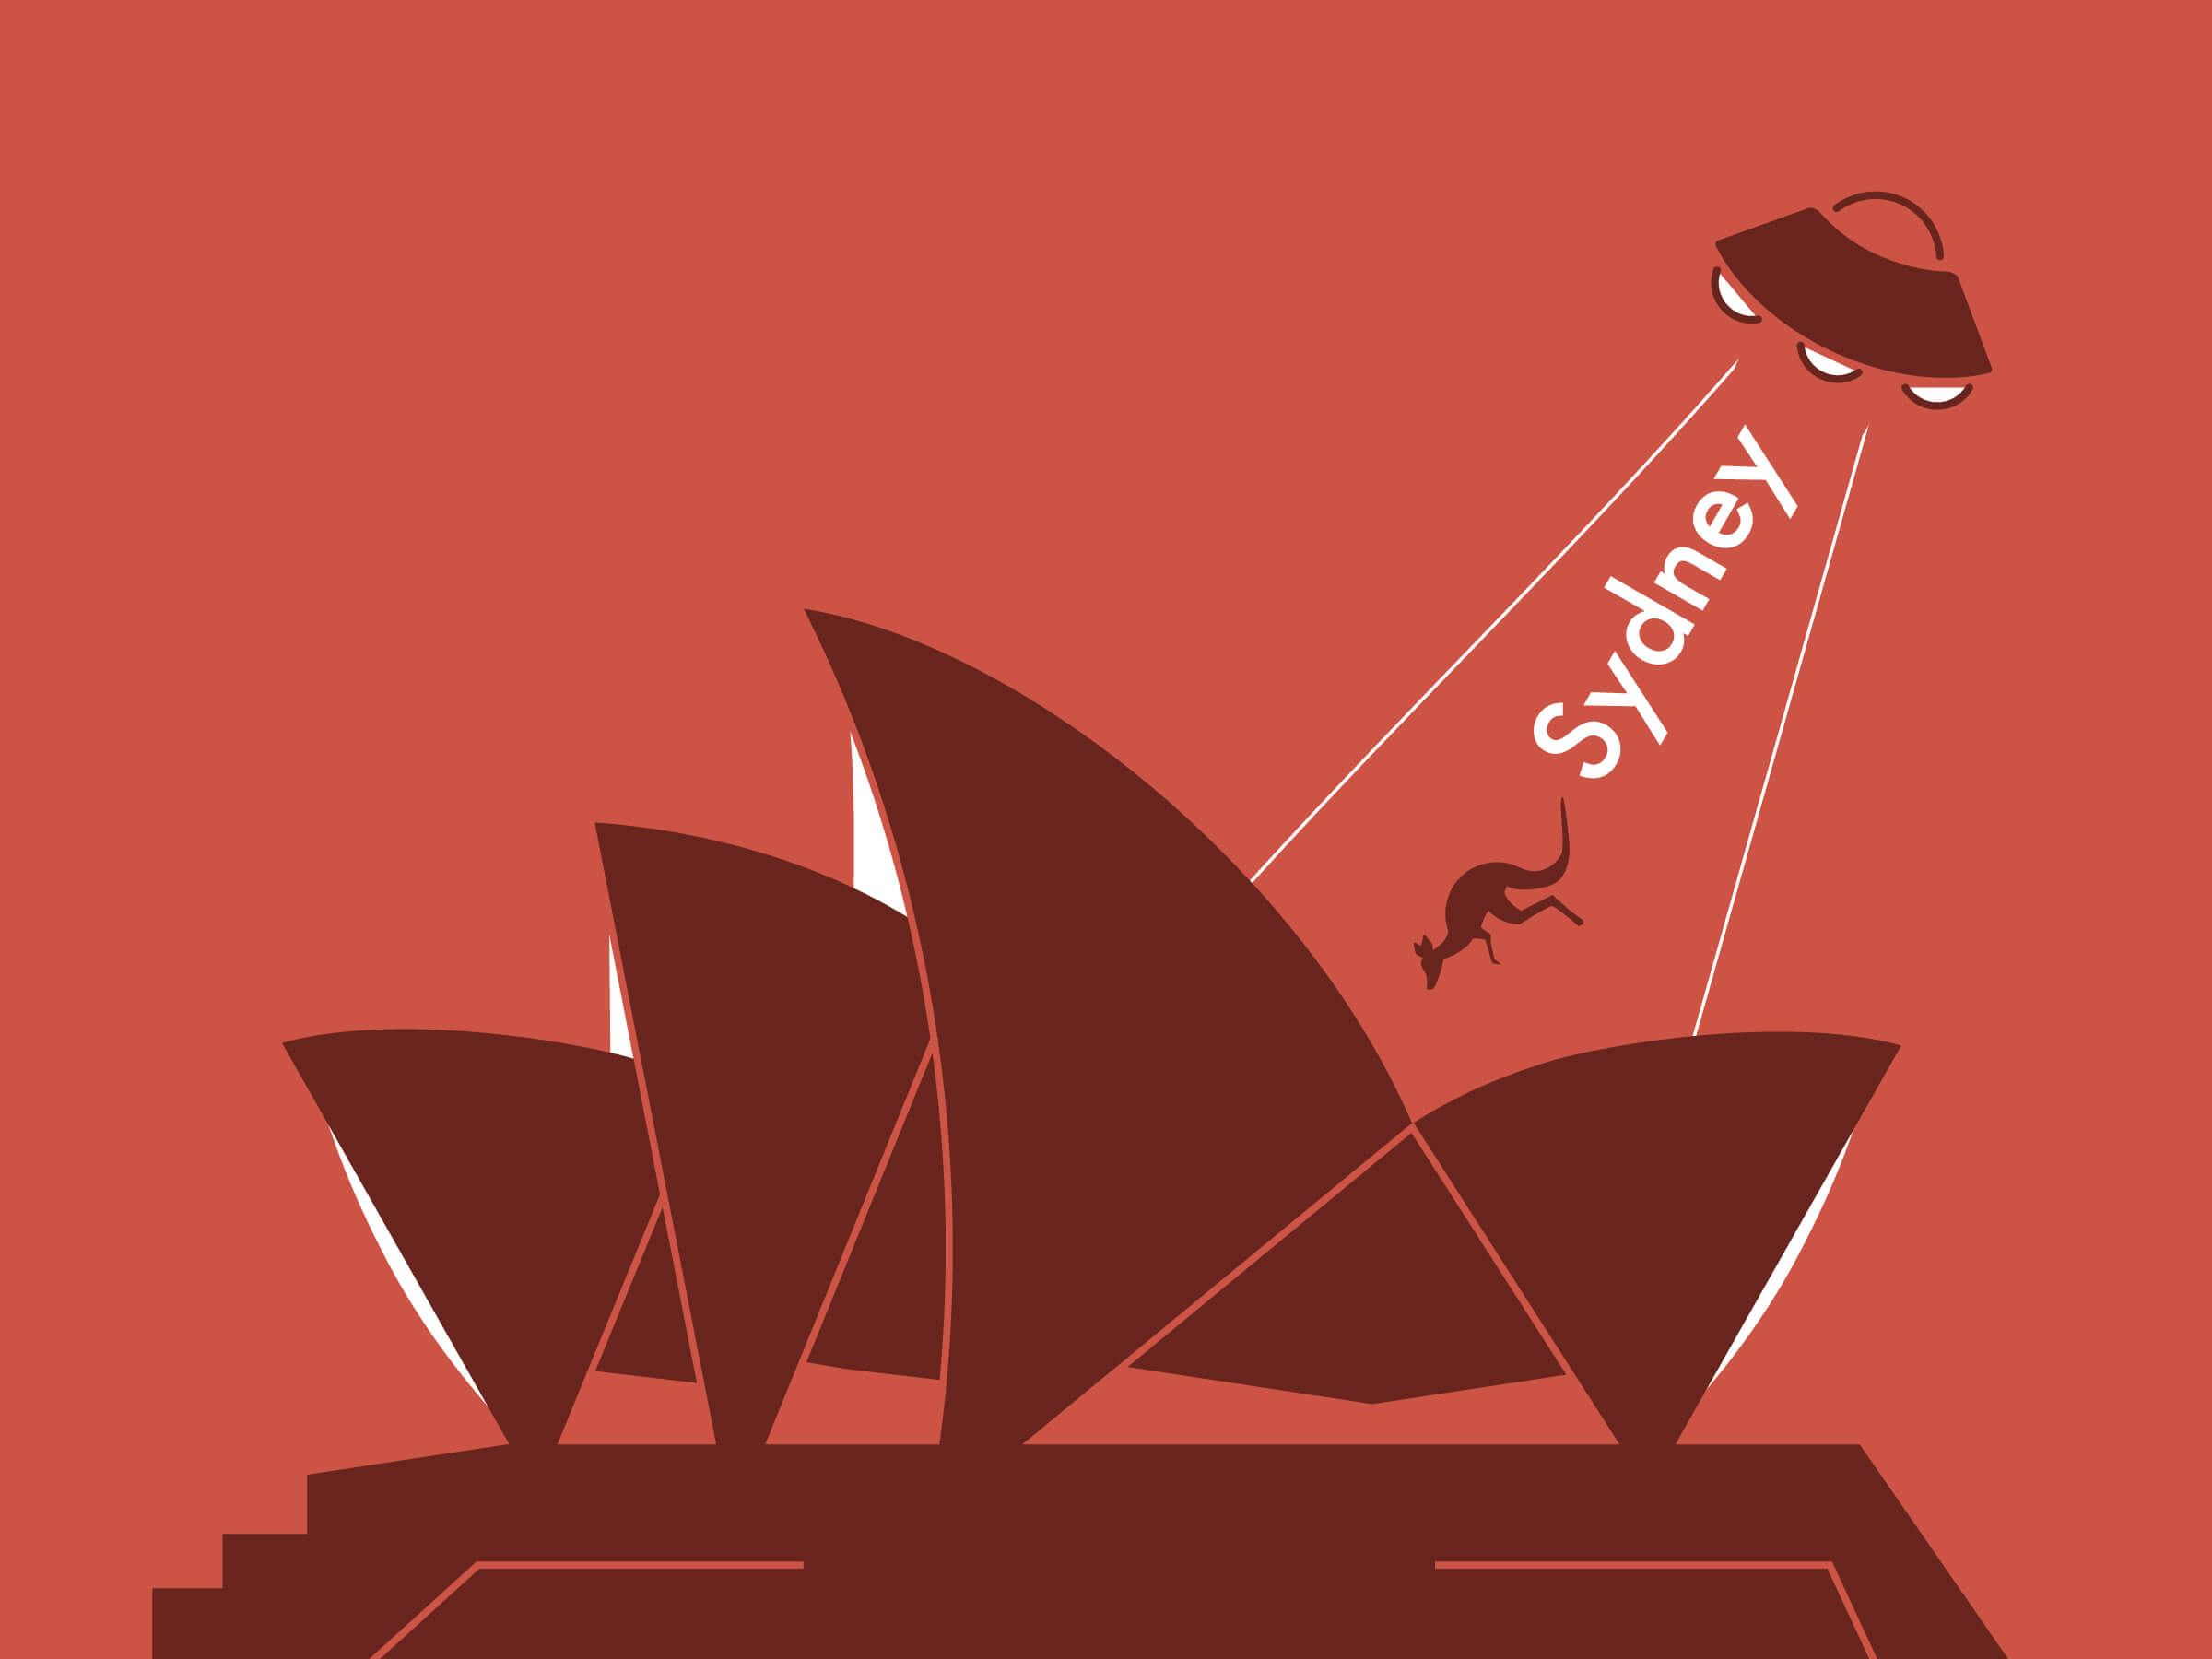 Sydney, Kangeroos, and UFOs